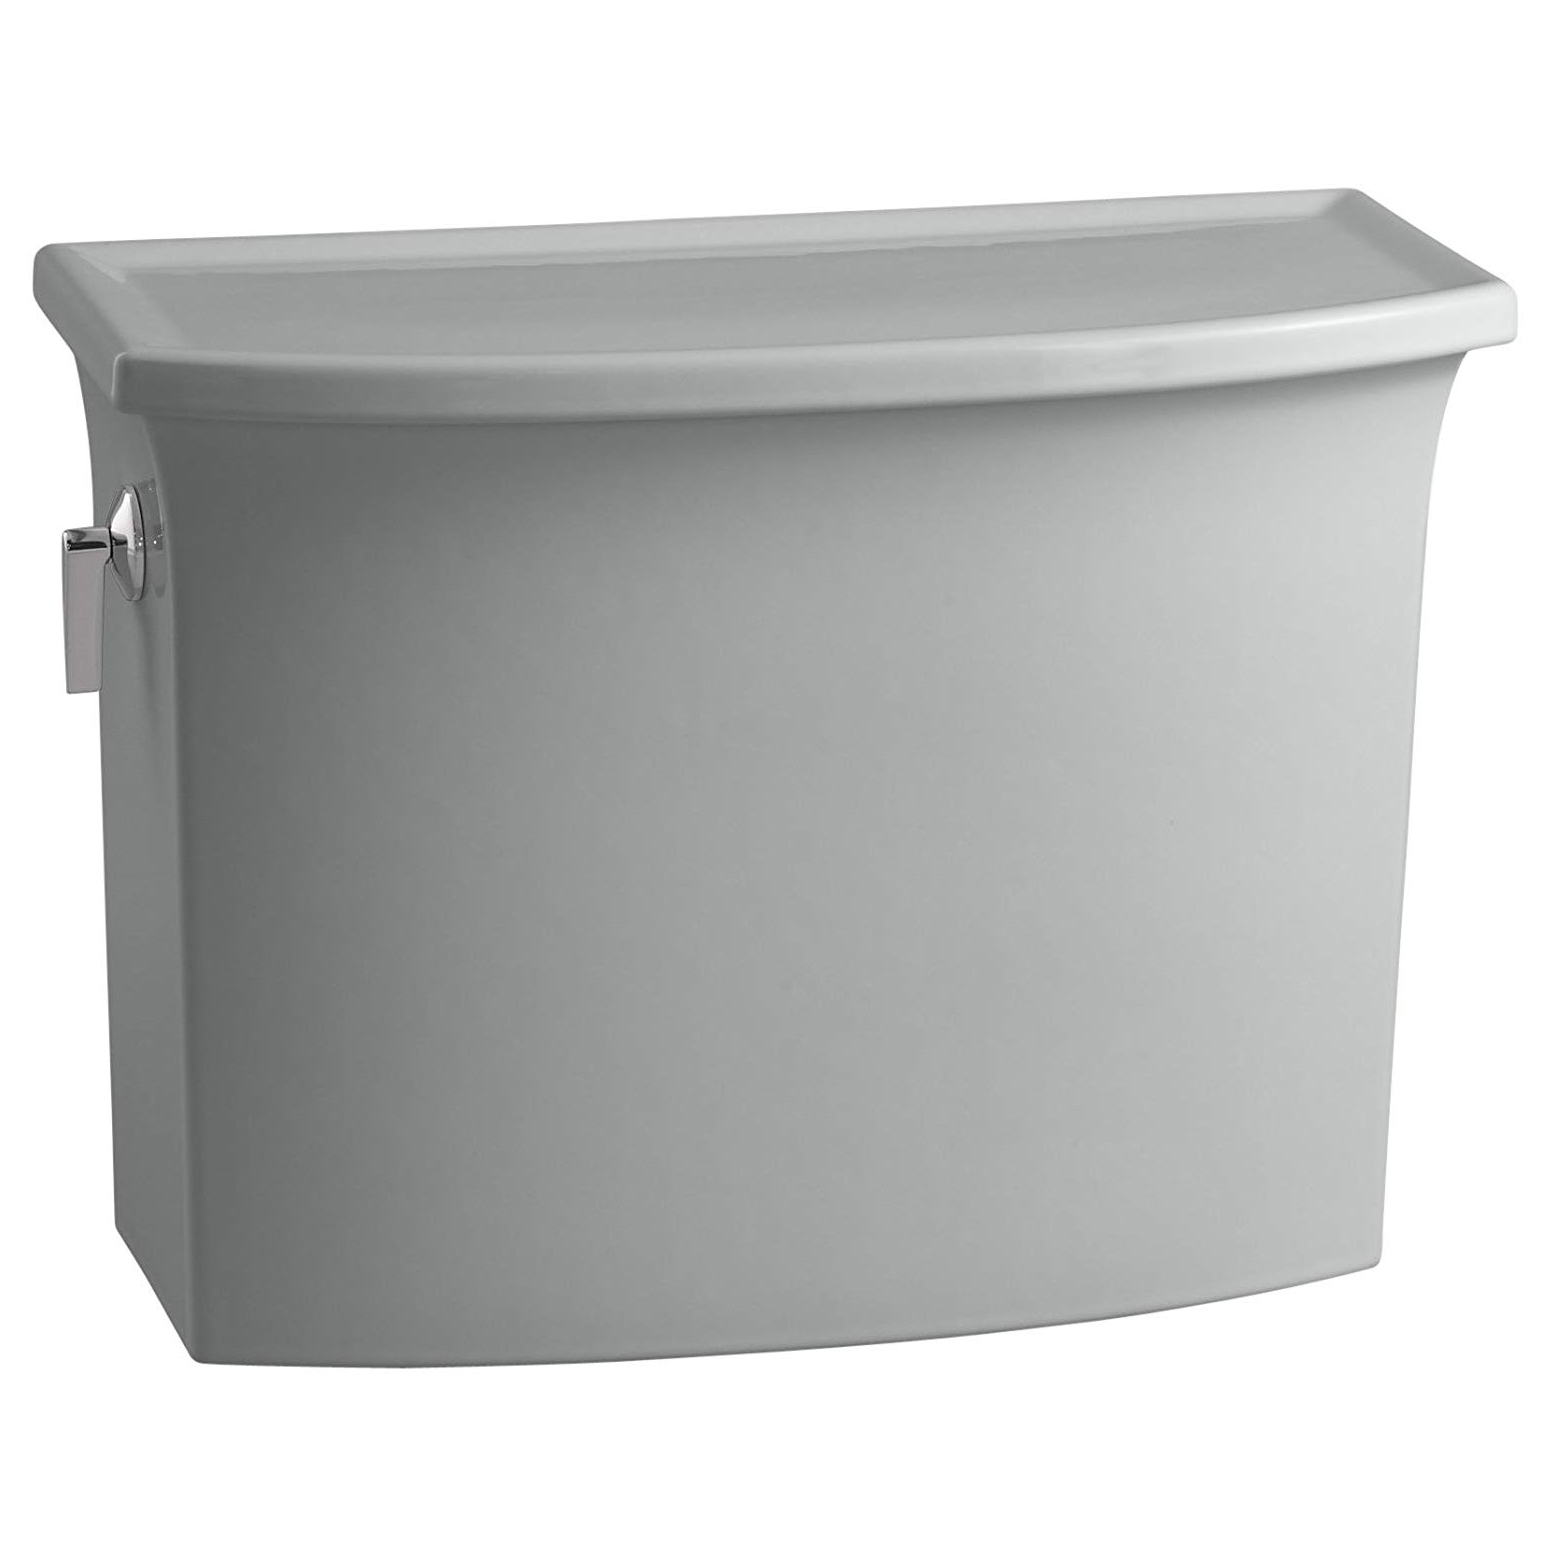 Archer 1.28 gpf Toilet Tank in Ice Grey